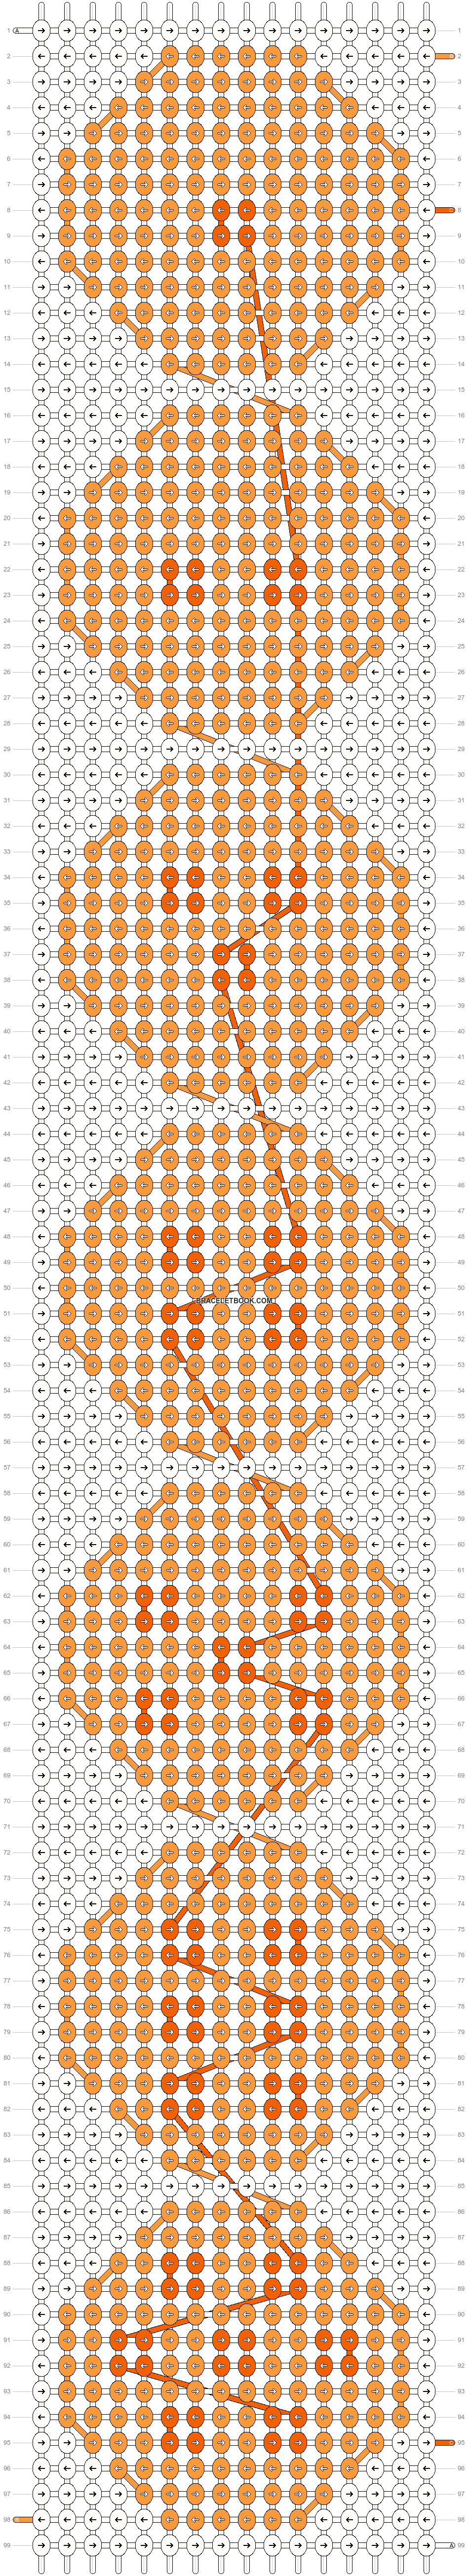 Alpha pattern #19265 pattern